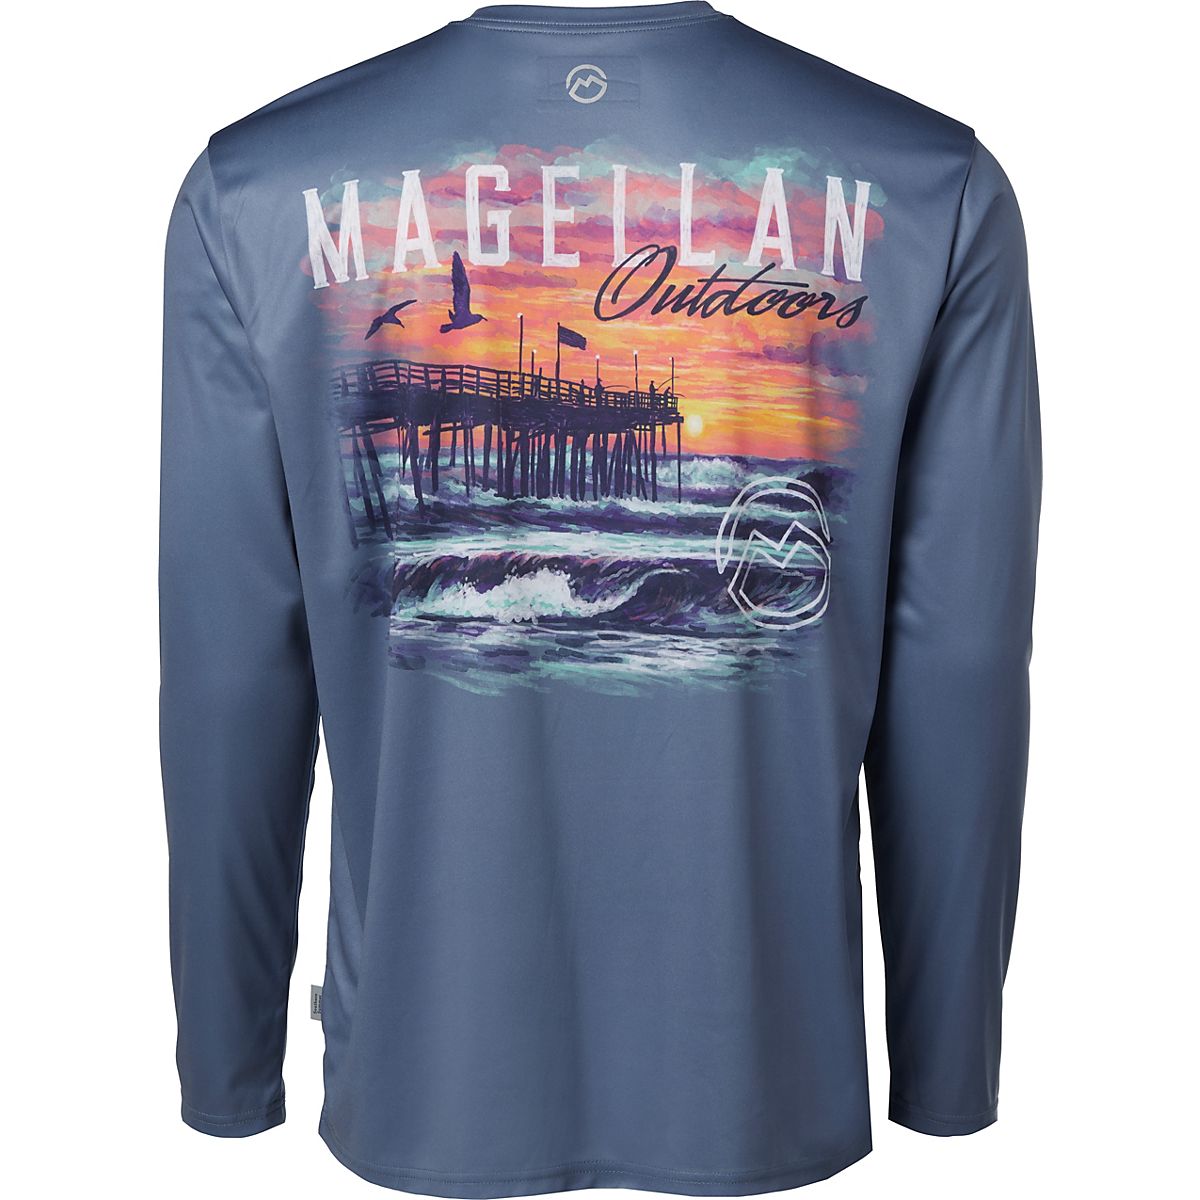 Magellan Outdoors Men's FishGear Southern Summer Graphic Long Sleeve  T-shirt